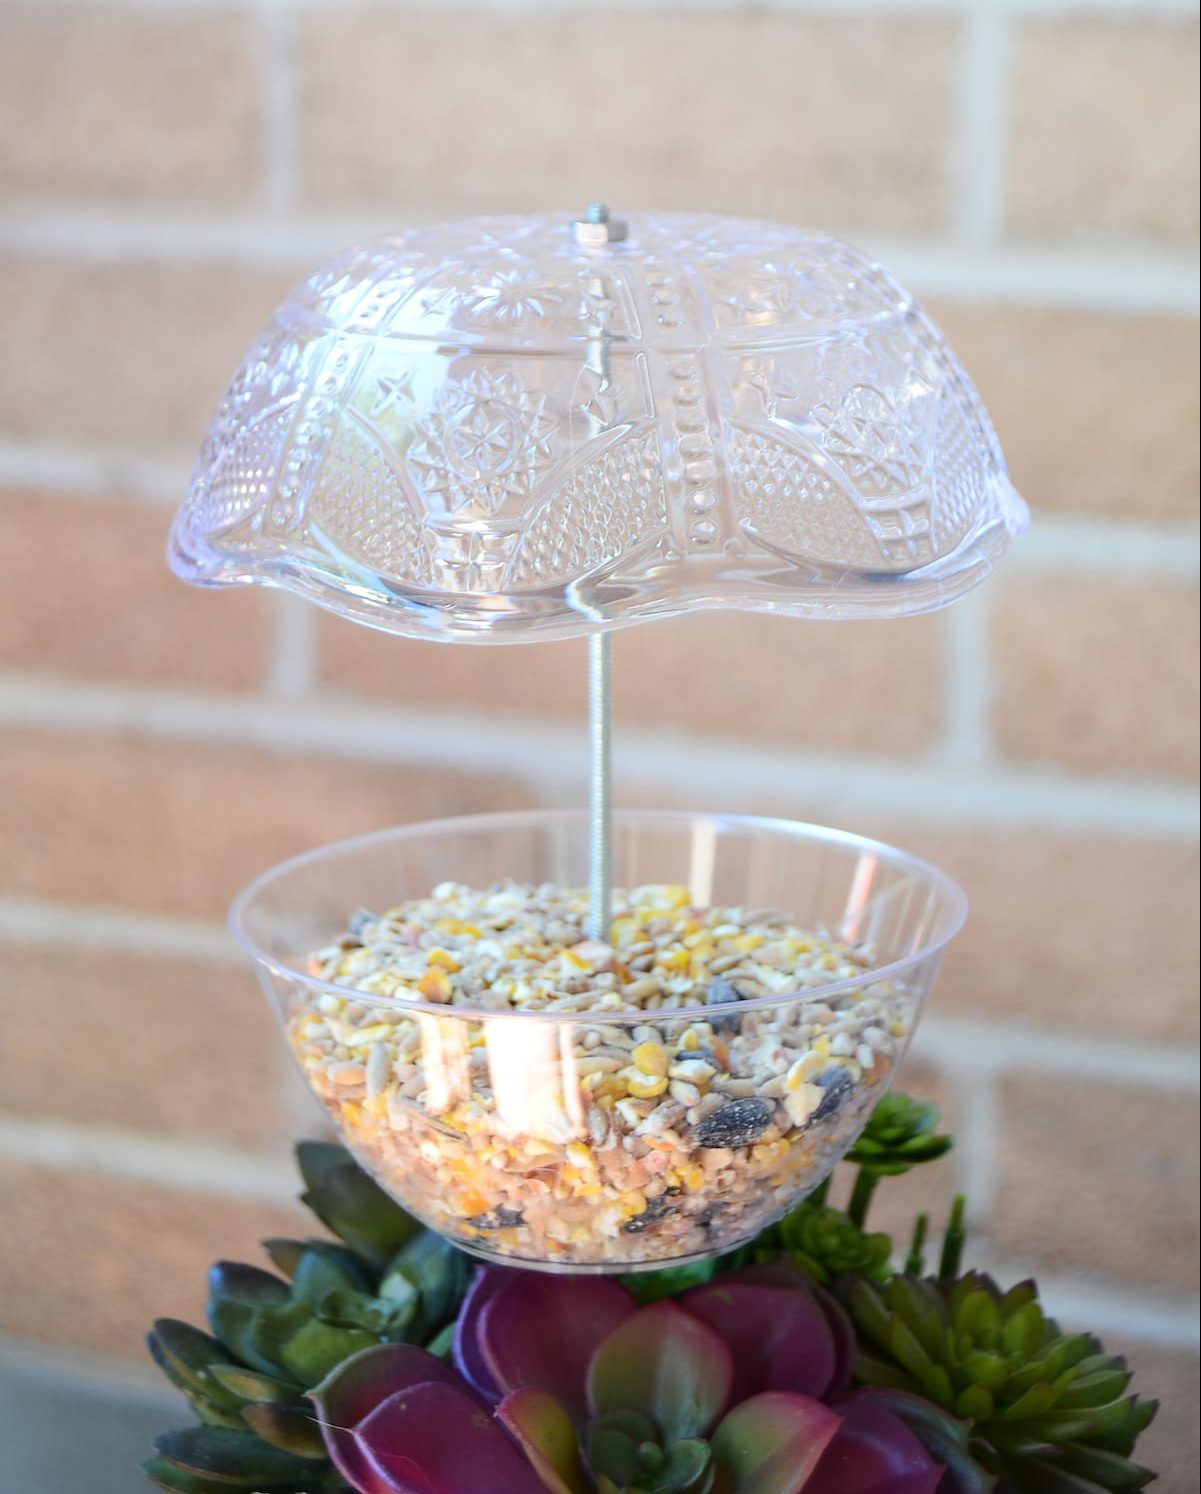 DIY bird feeder with plastic plates